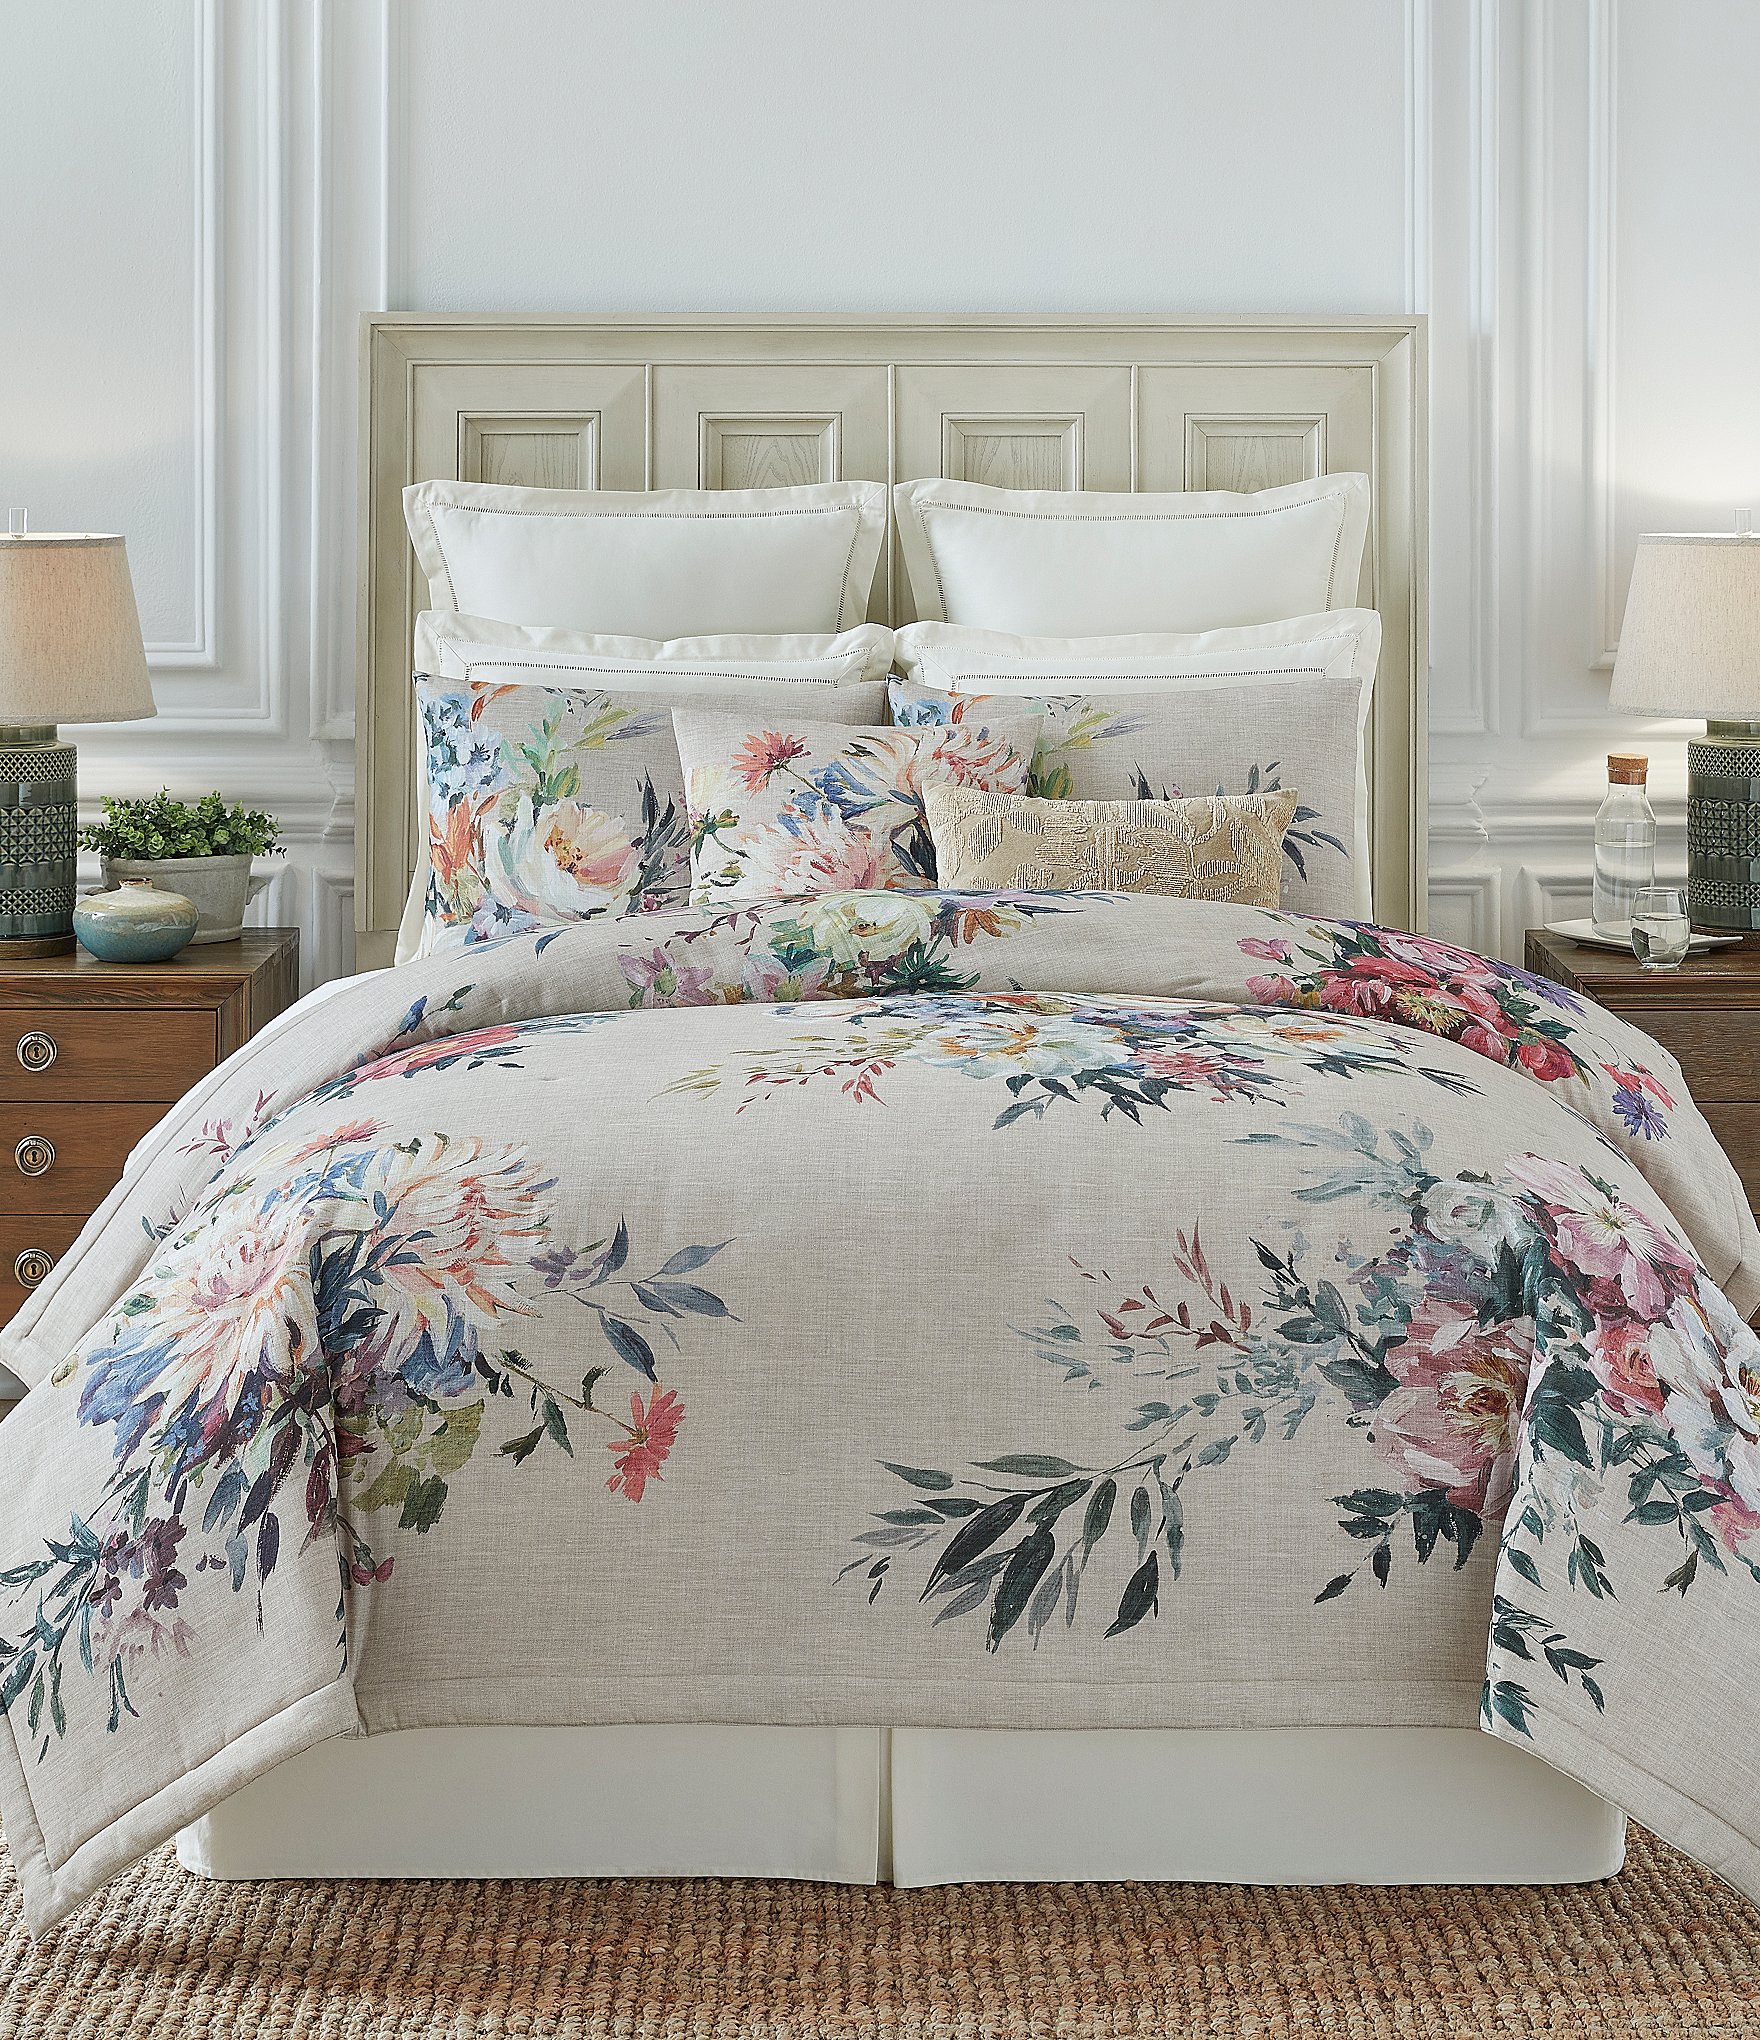 Floral Comforter Set Bedroom Bed Bedding Printed Full Queen Blue Grey 4 pc 